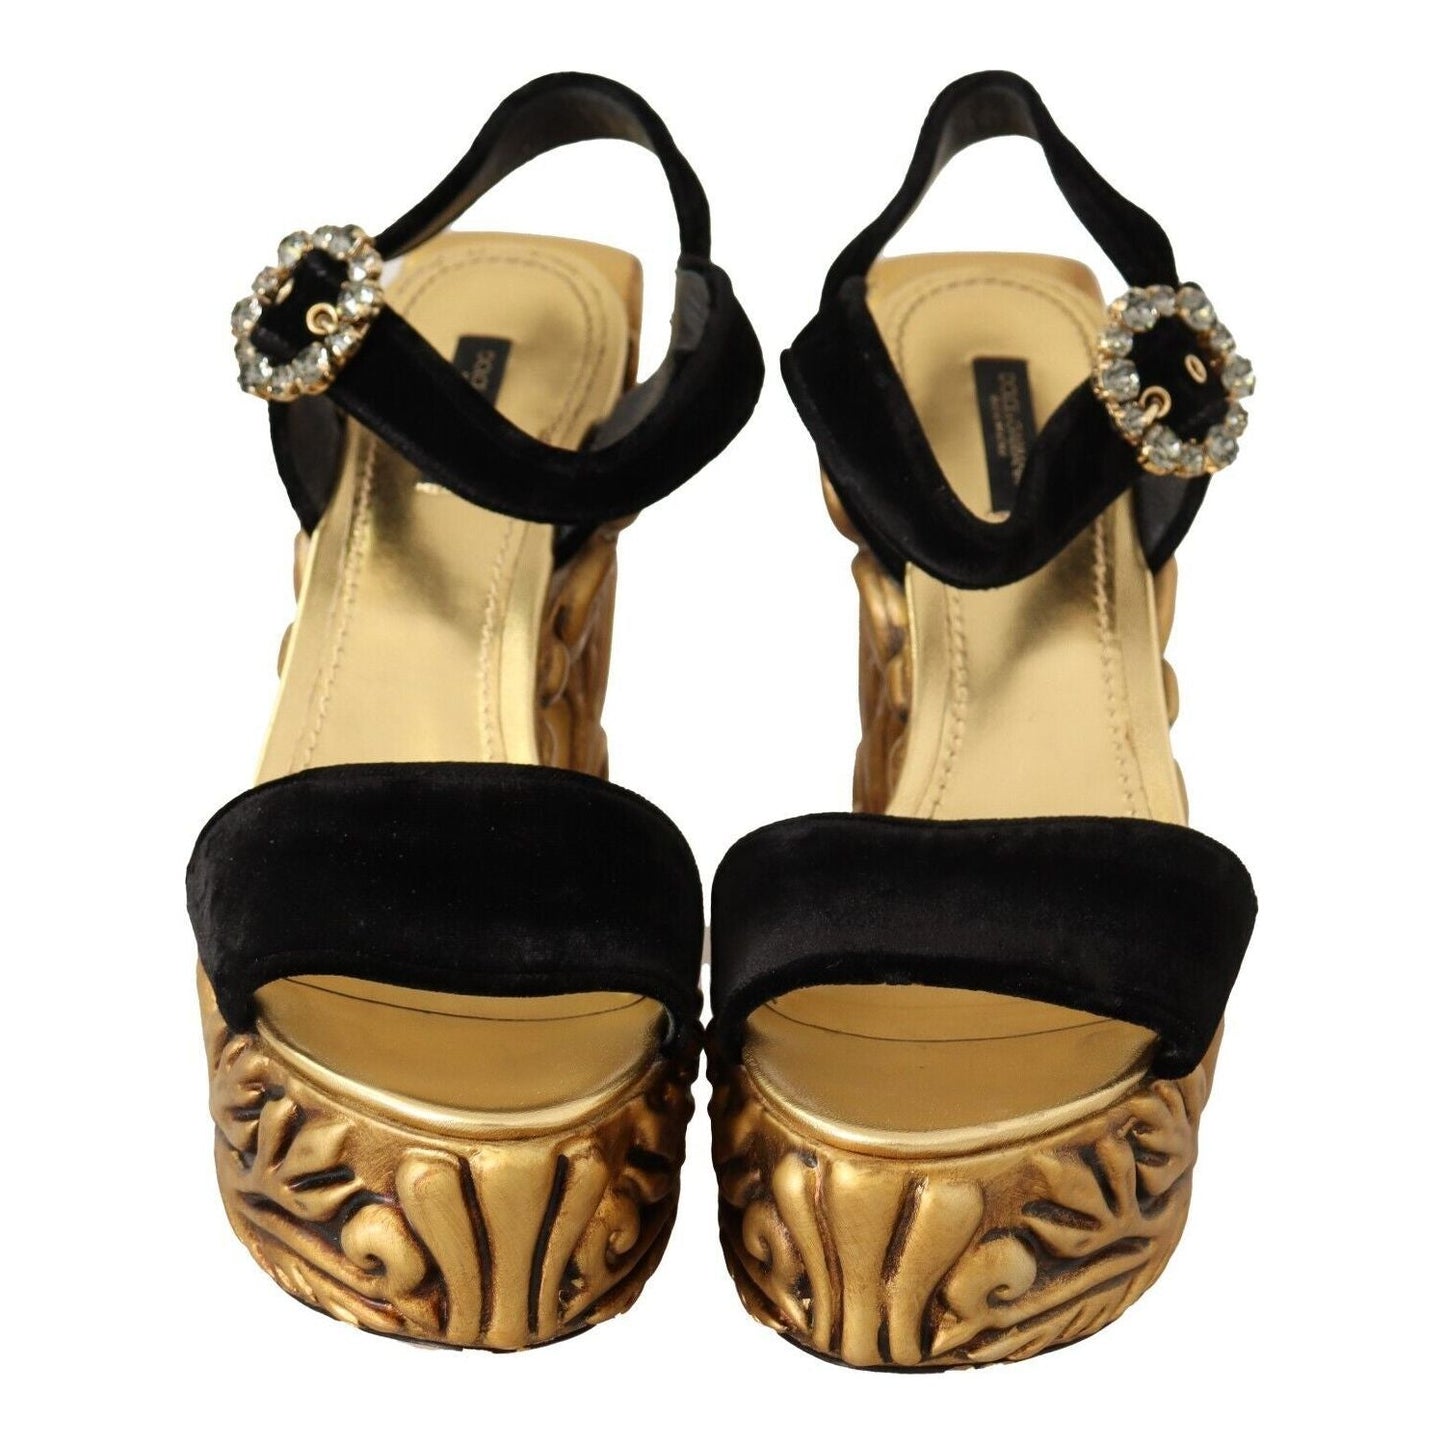 Dolce & GabbanaBaroque Velvet Heels in Black and GoldMcRichard Designer Brands£2079.00